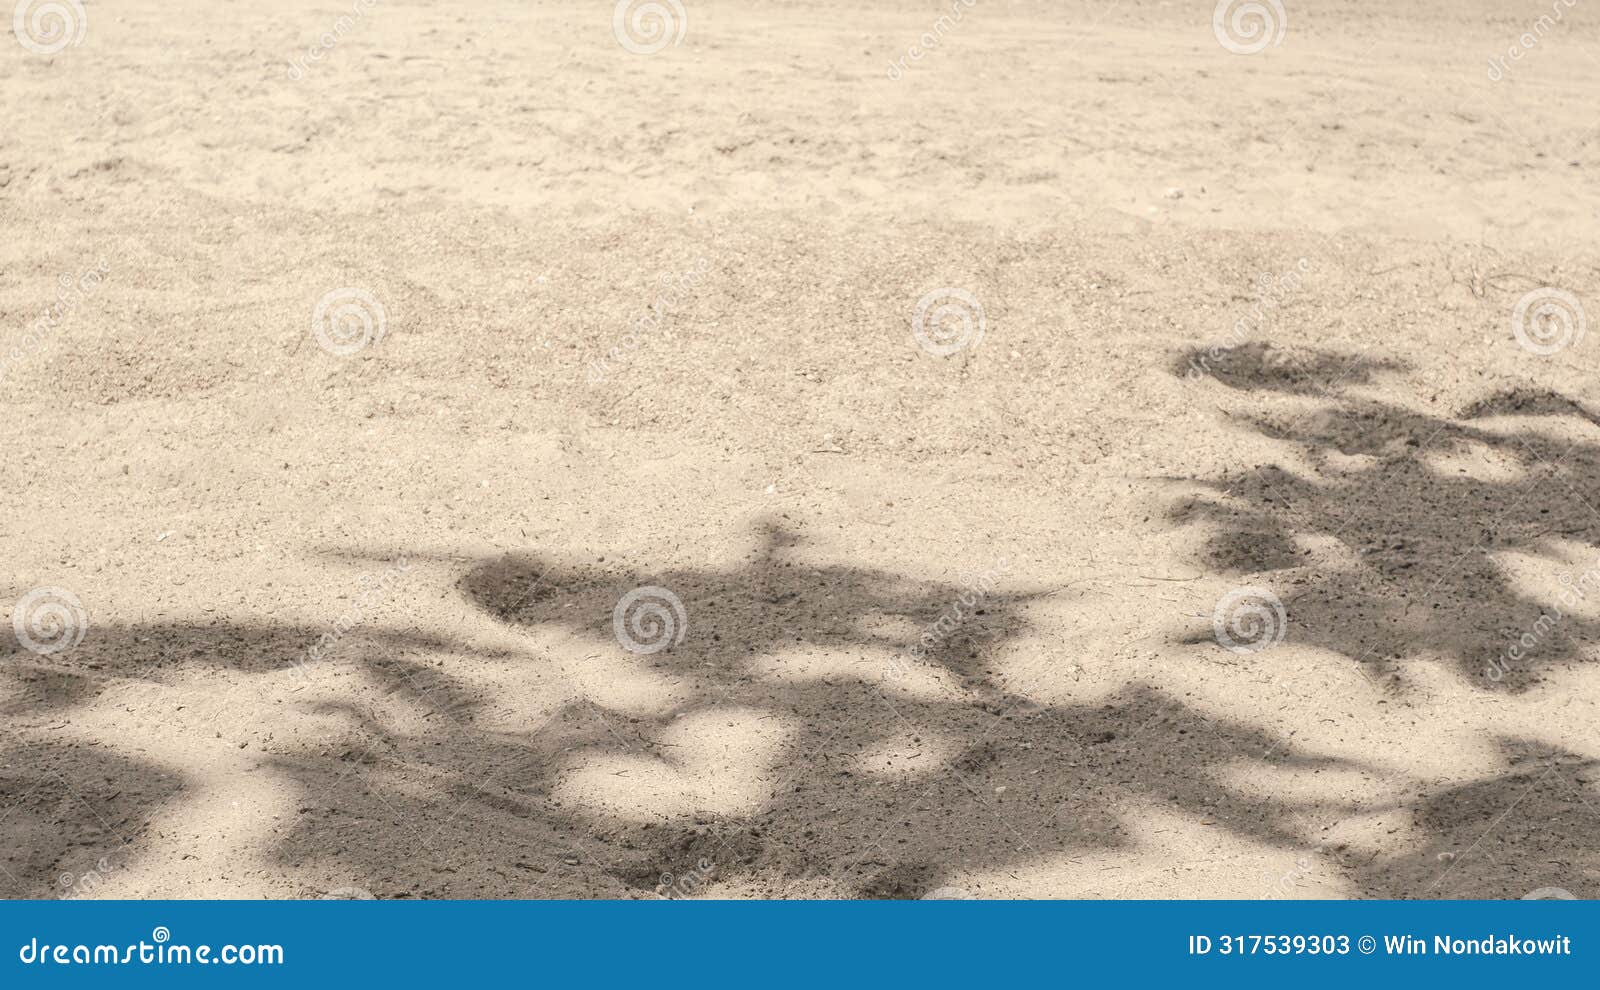 shade tree on sandy beach